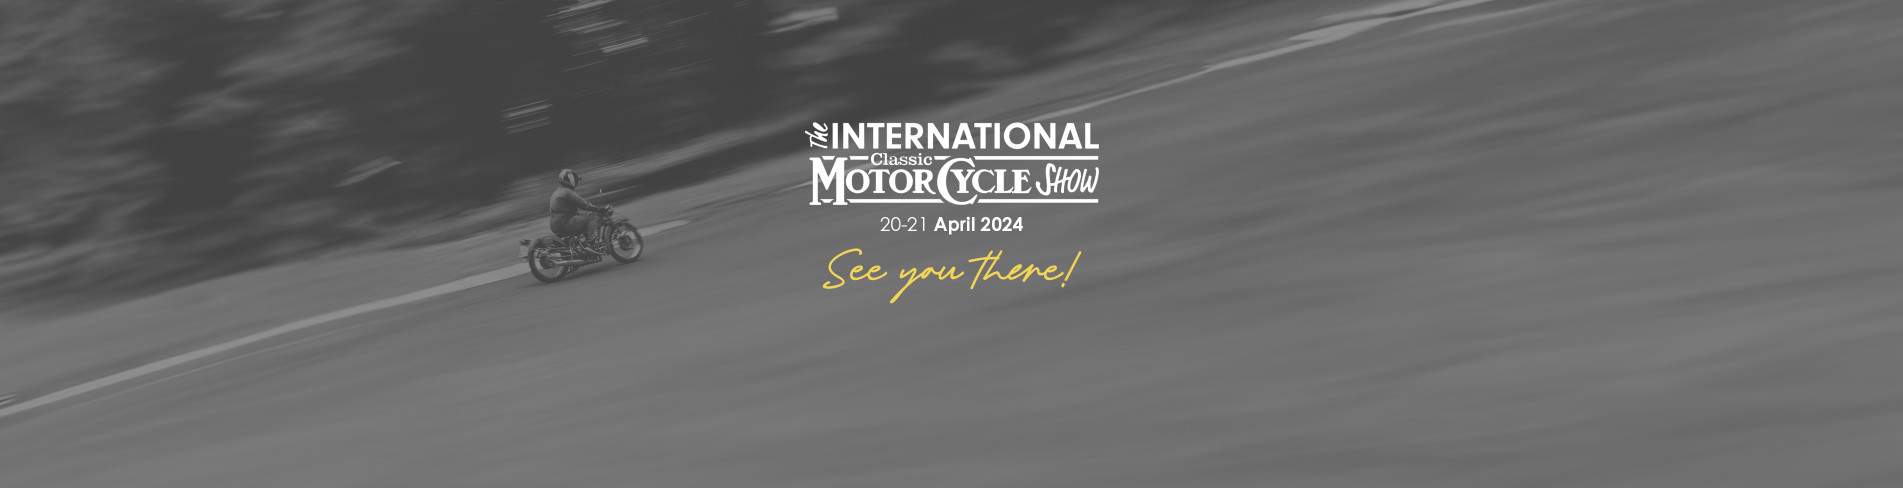 International Cycle Show